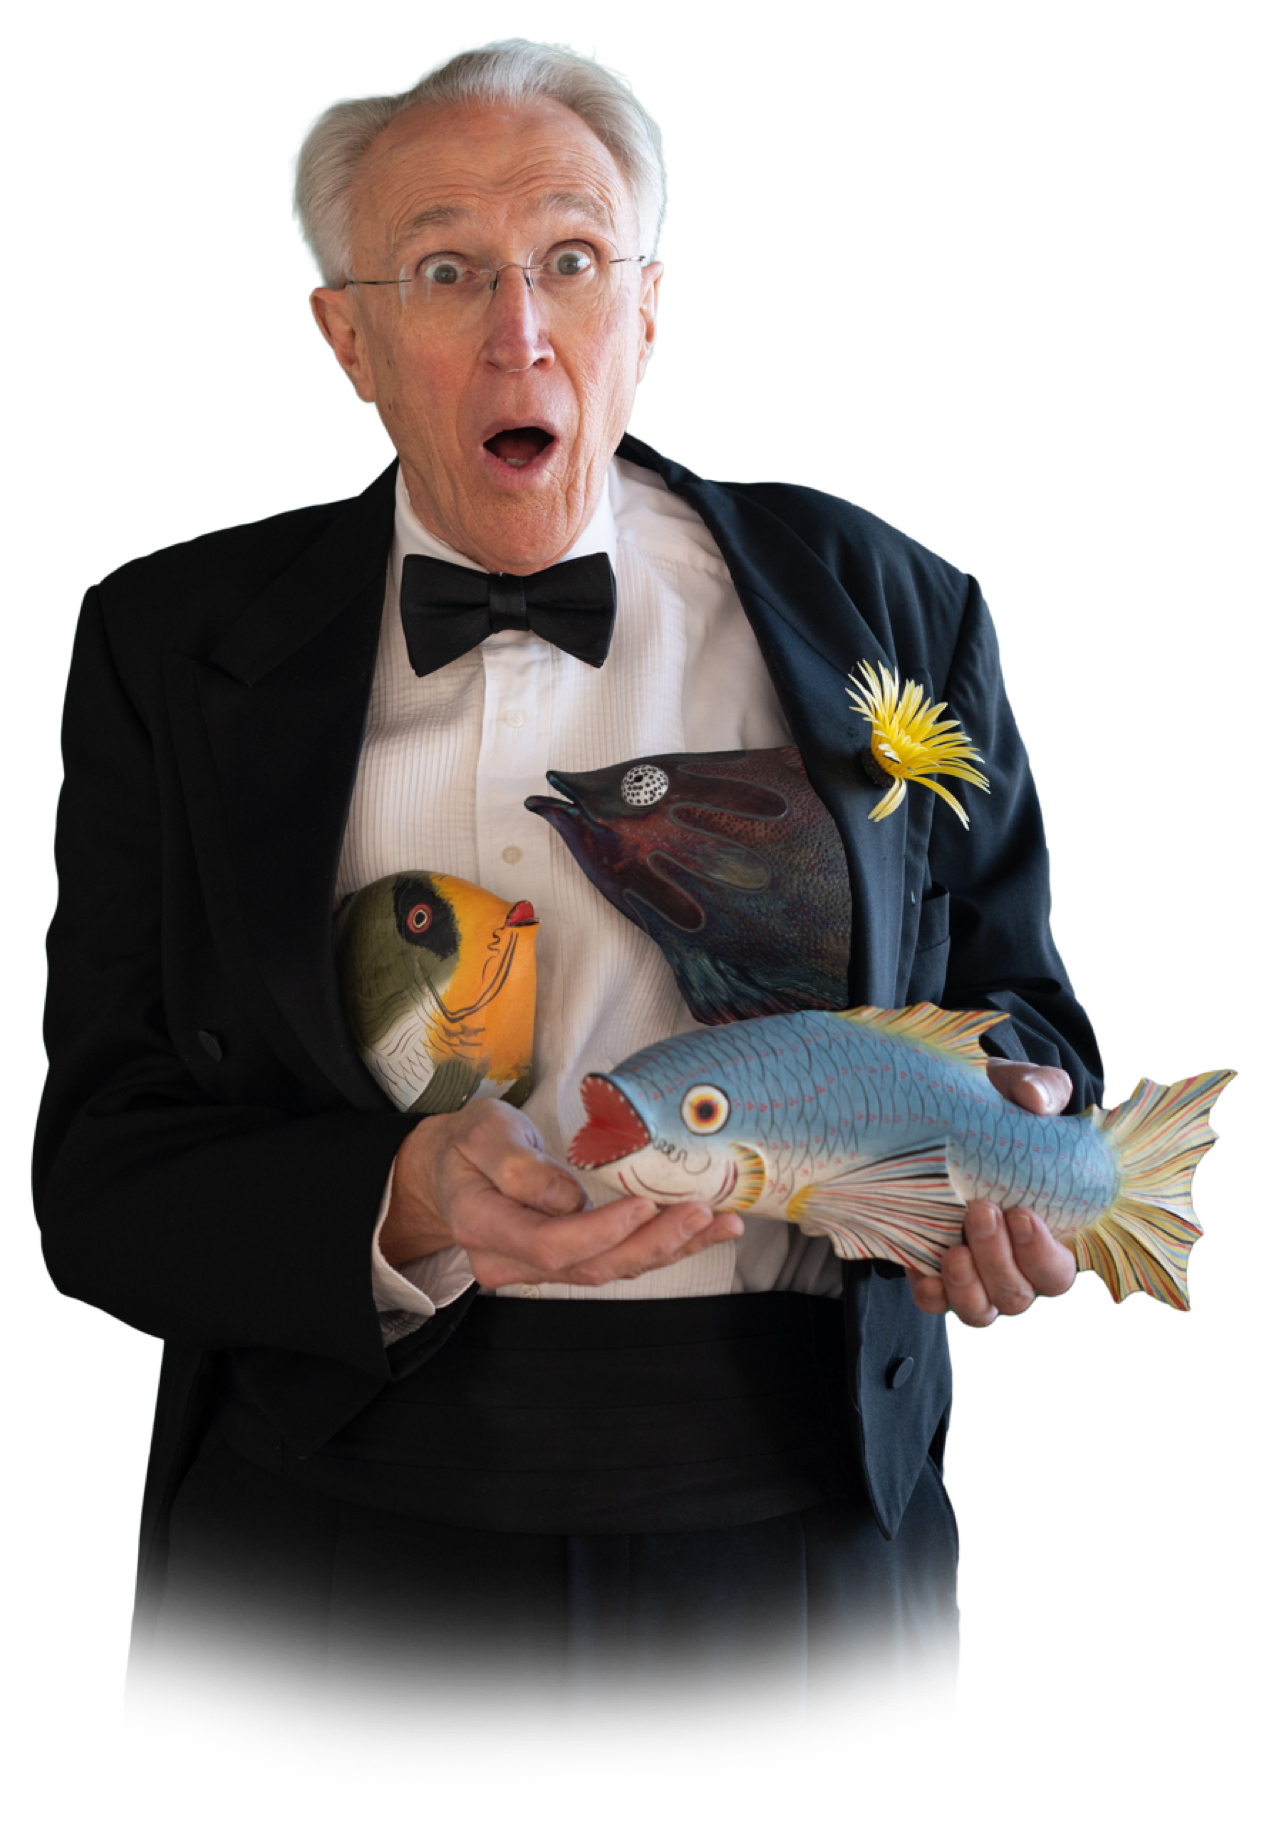 Al Simmons and his fish